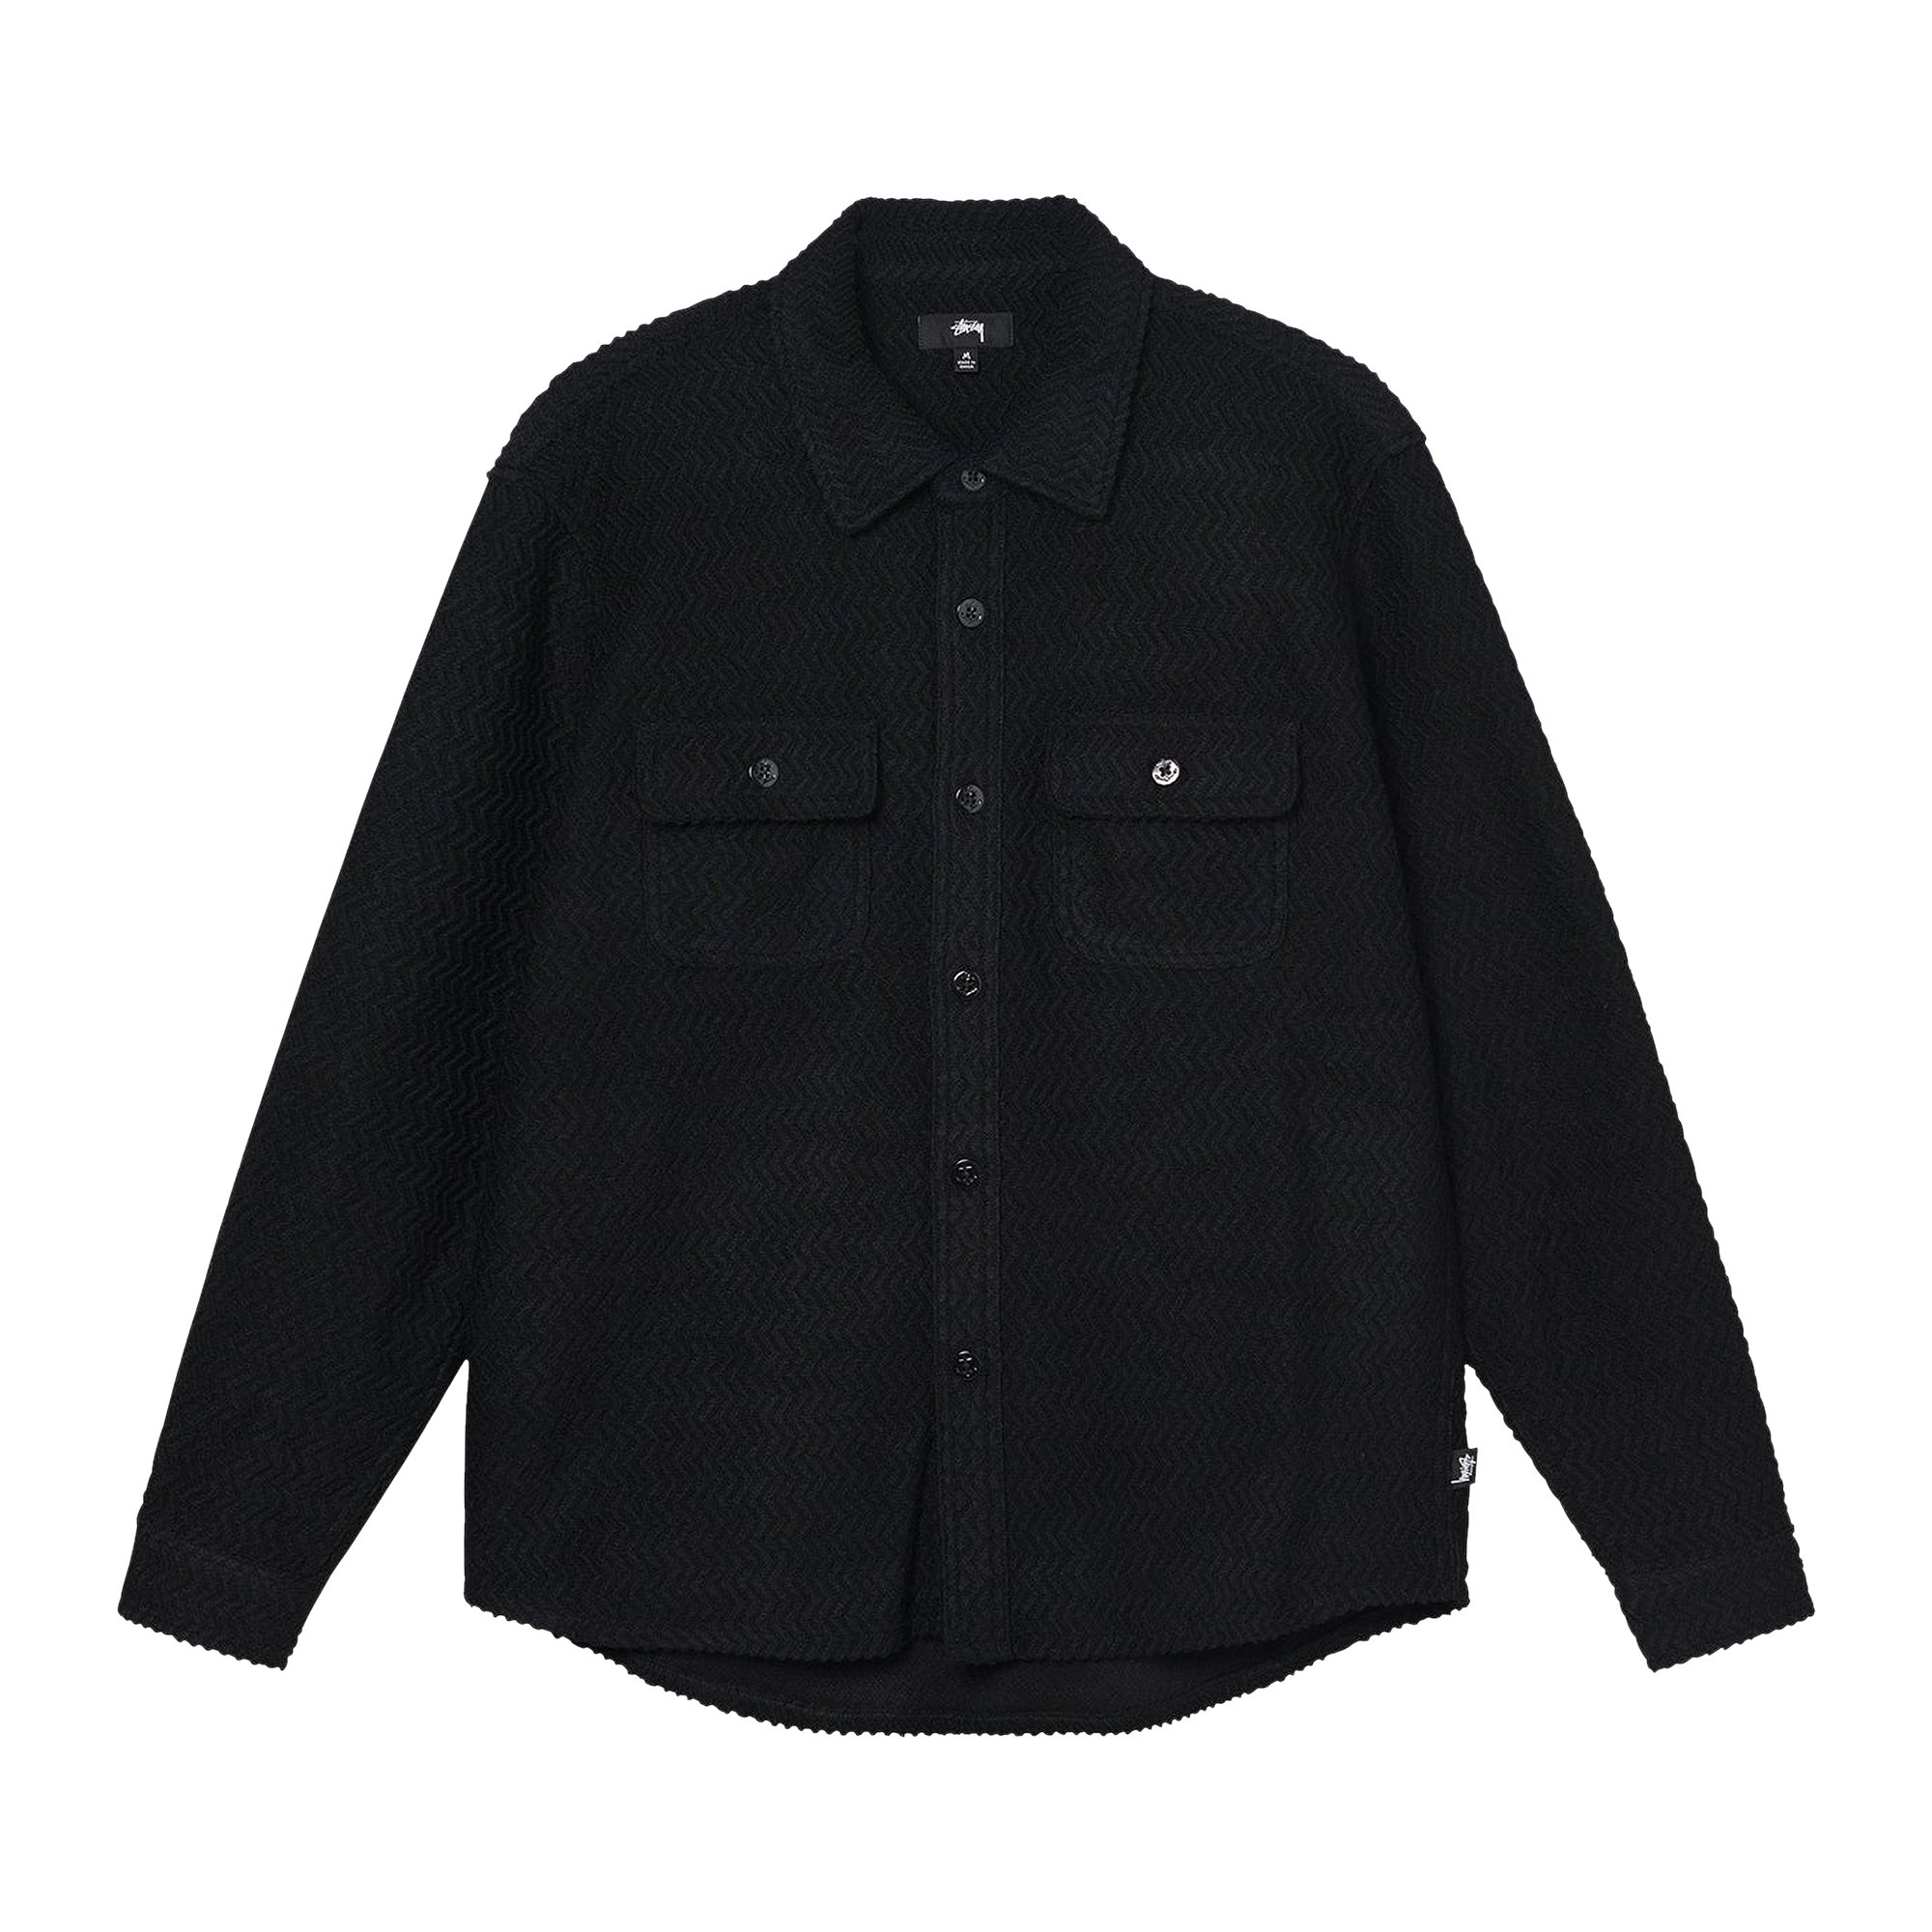 Buy Stussy Textured Wool CPO Long-Sleeve Shirt 'Black' - 1110211